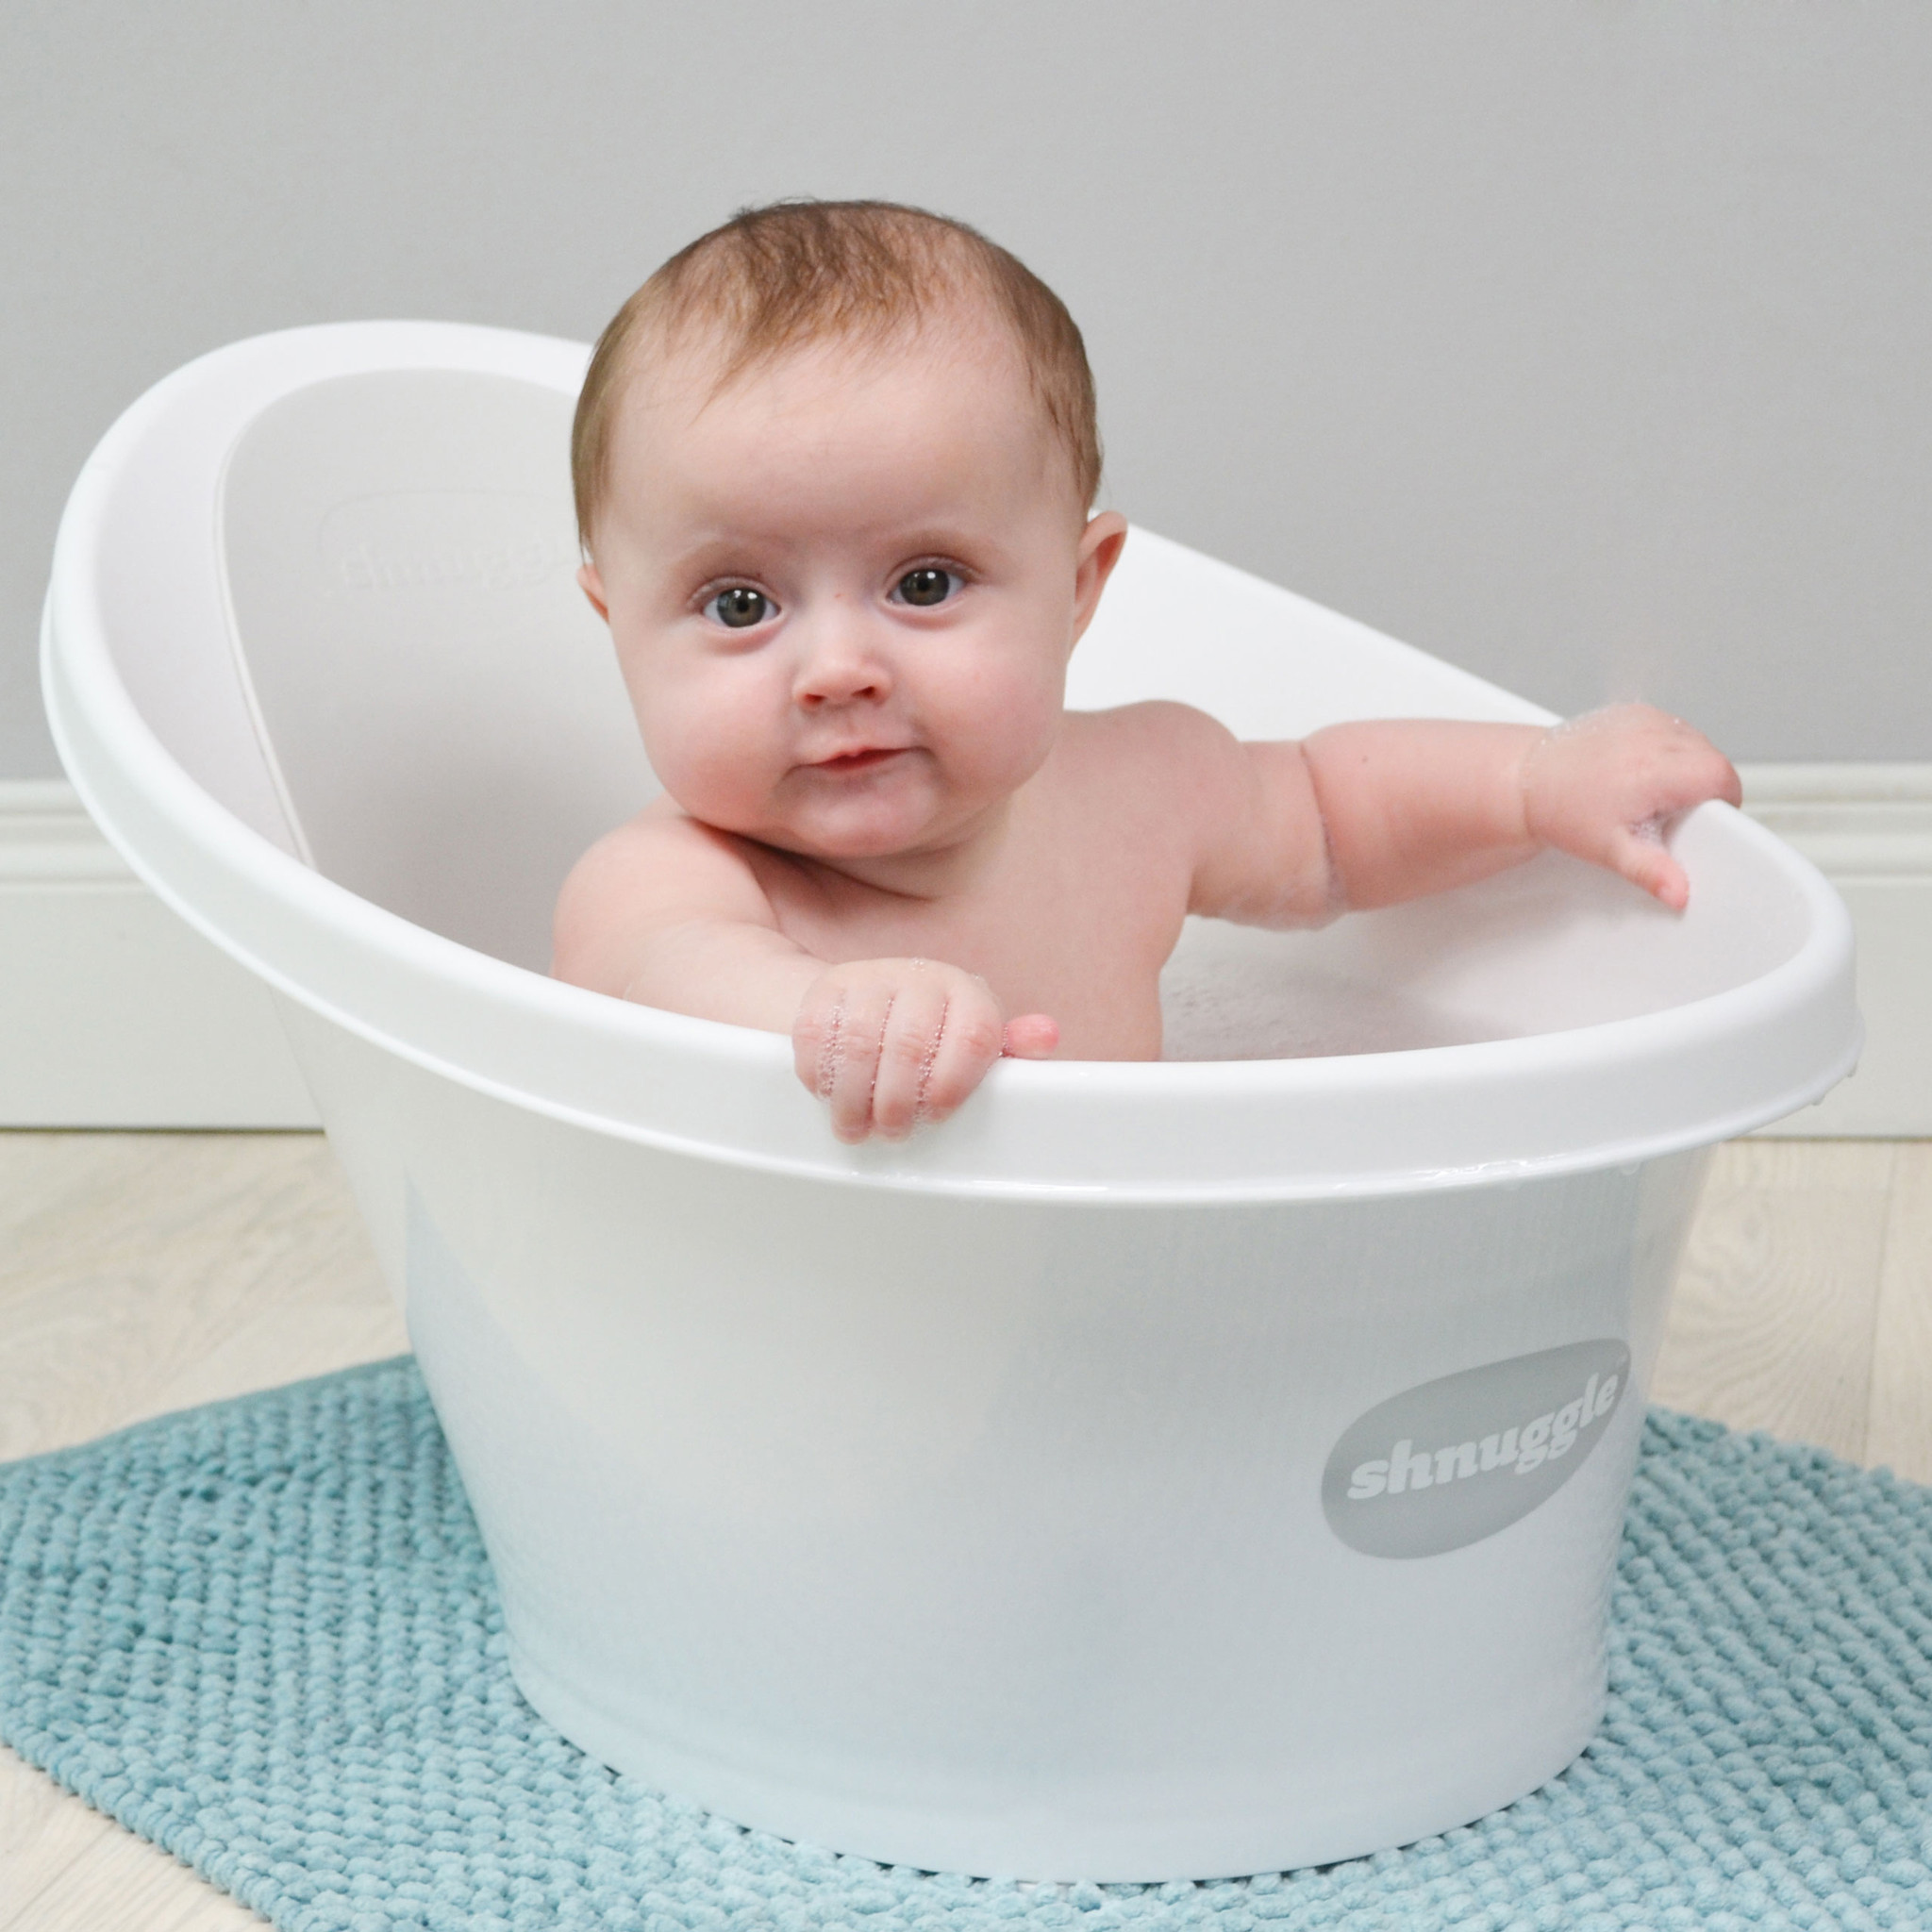 Shnuggle Bath Makes Bathing Baby Easier And Safer